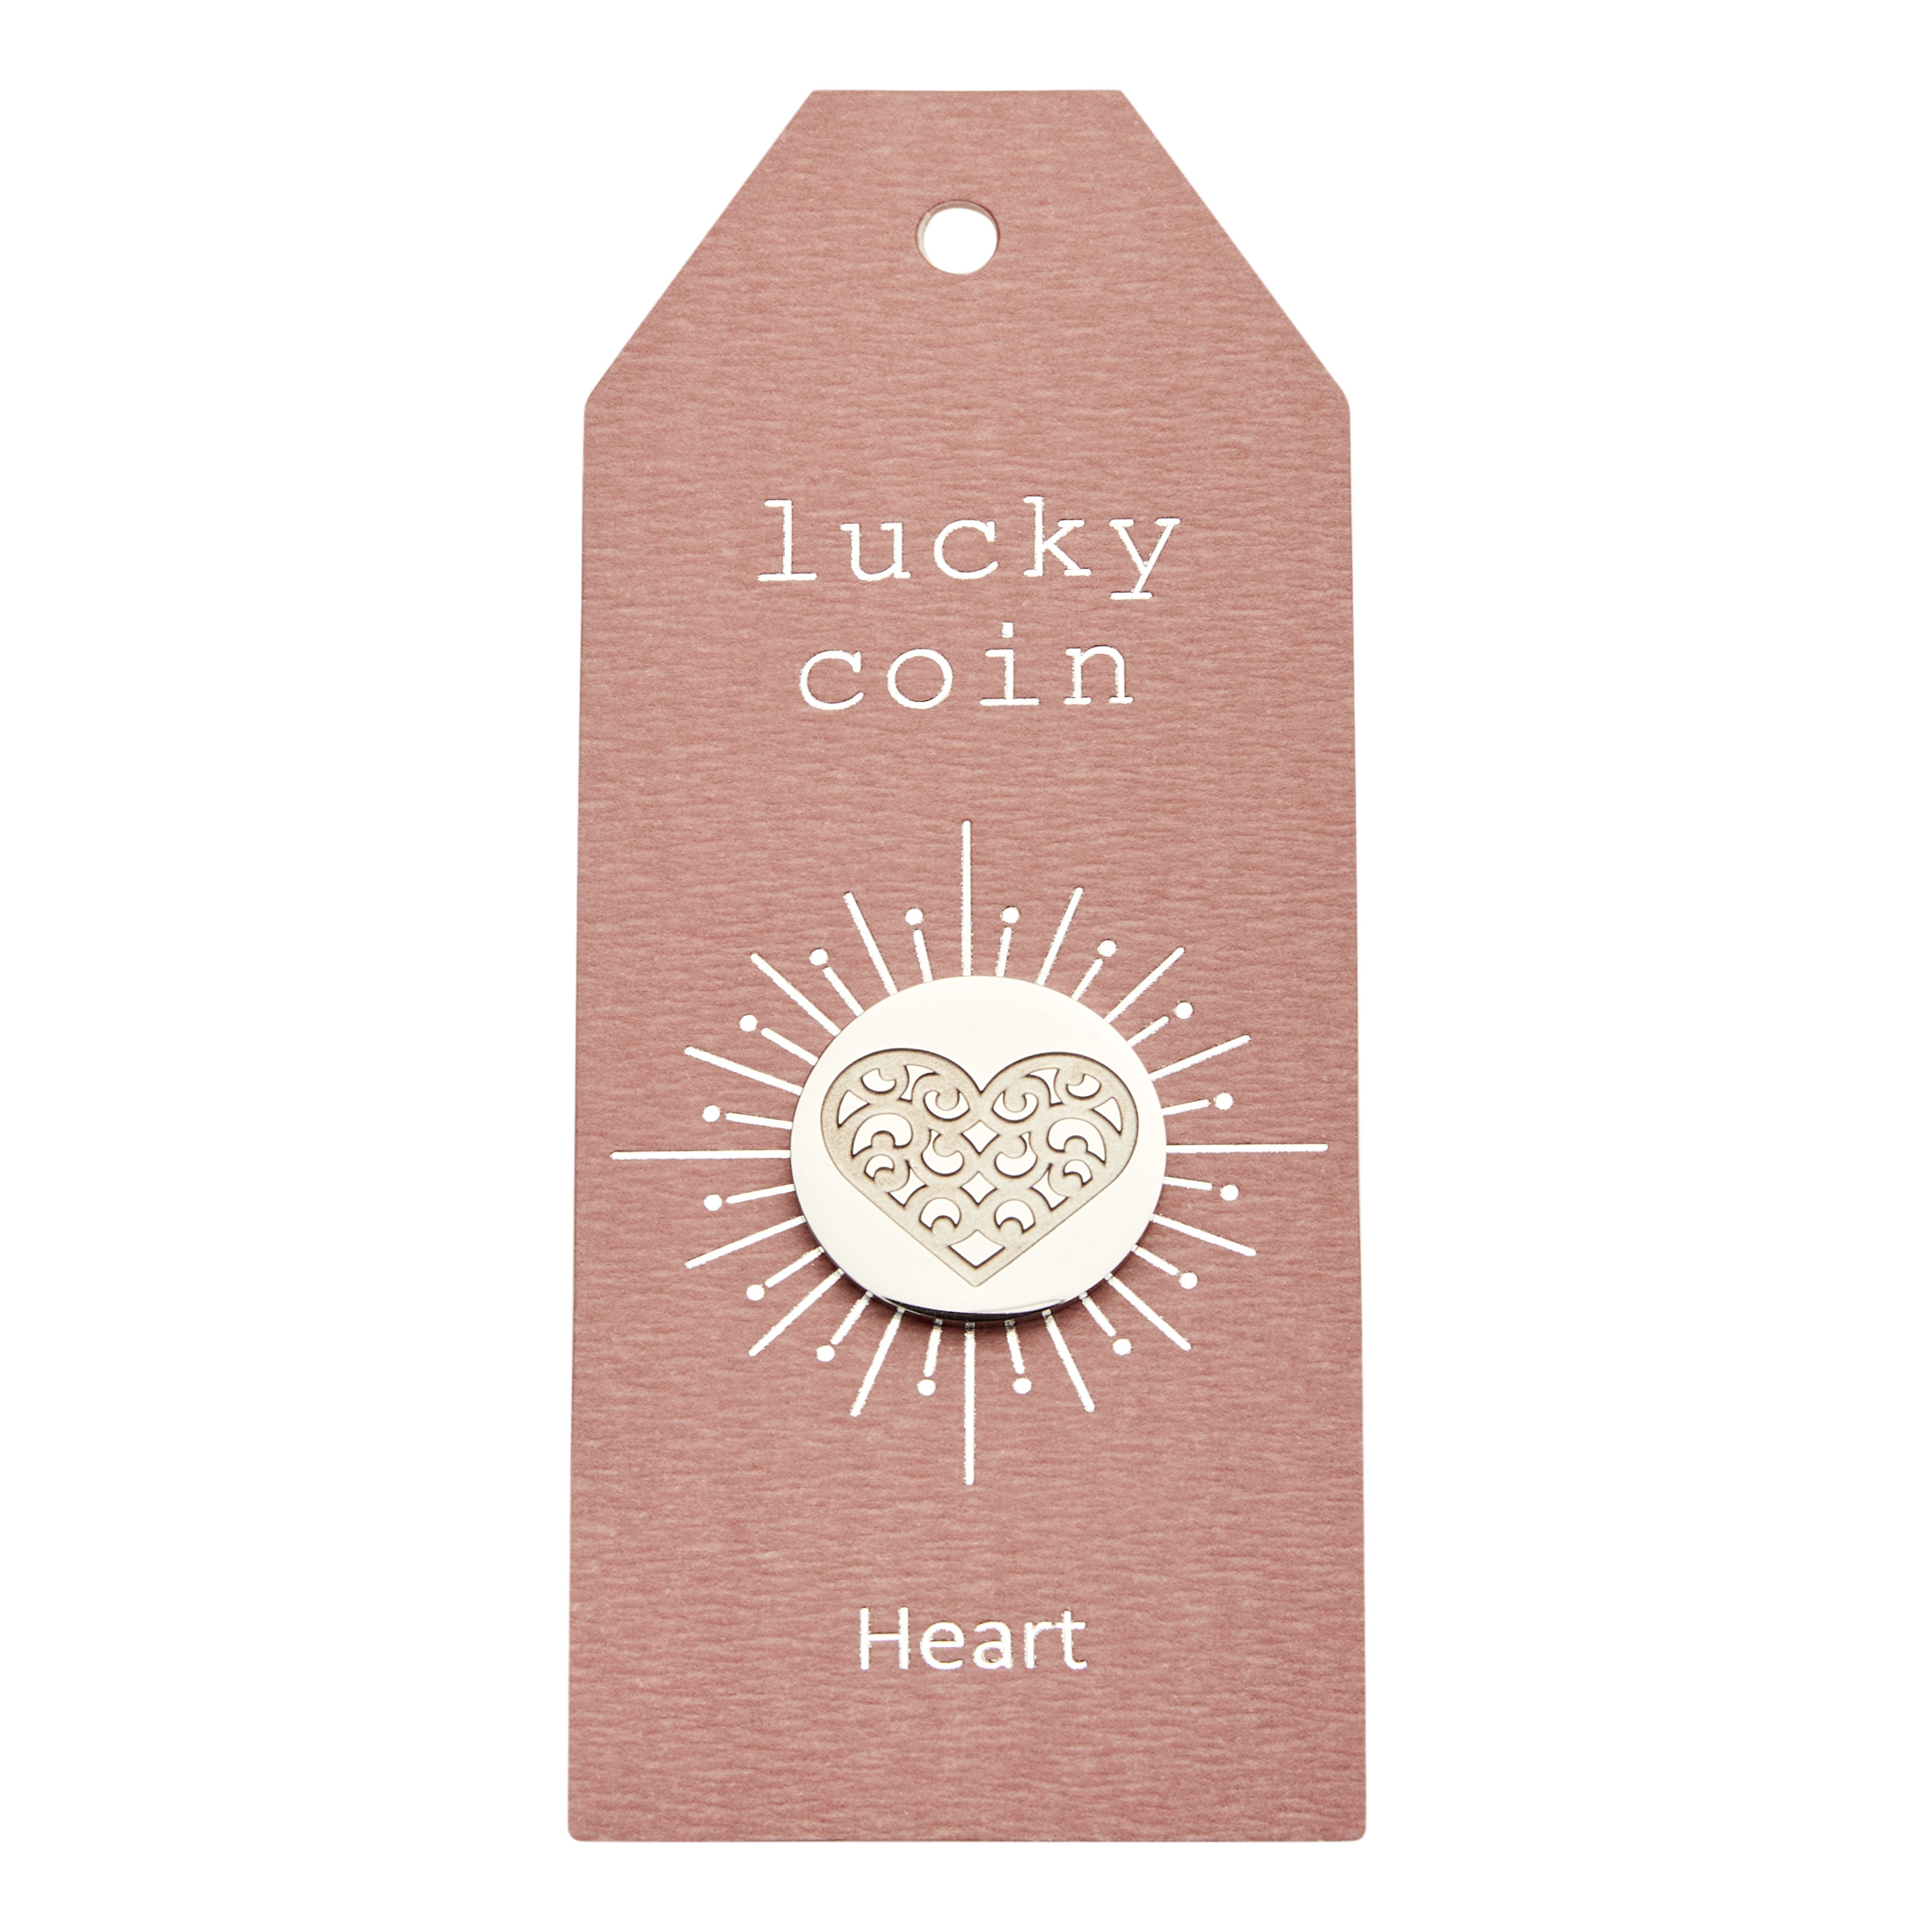 Münzen - "lucky coin" - Edelstahl - Herz